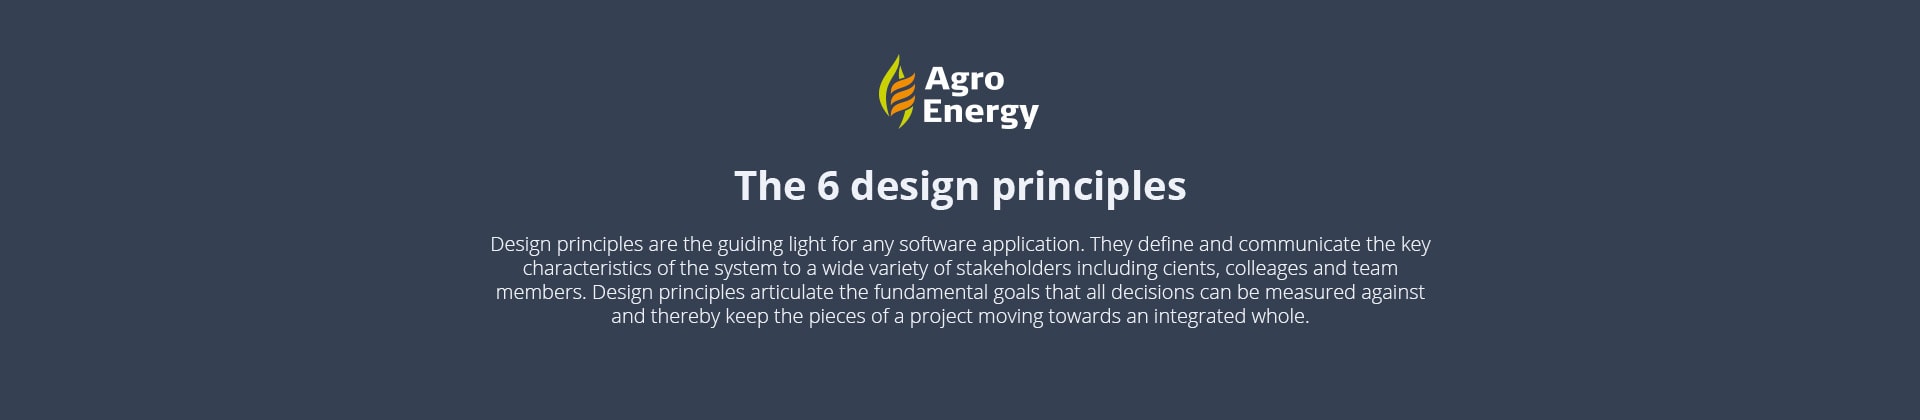 Thomas Elfrink Agro Energy design